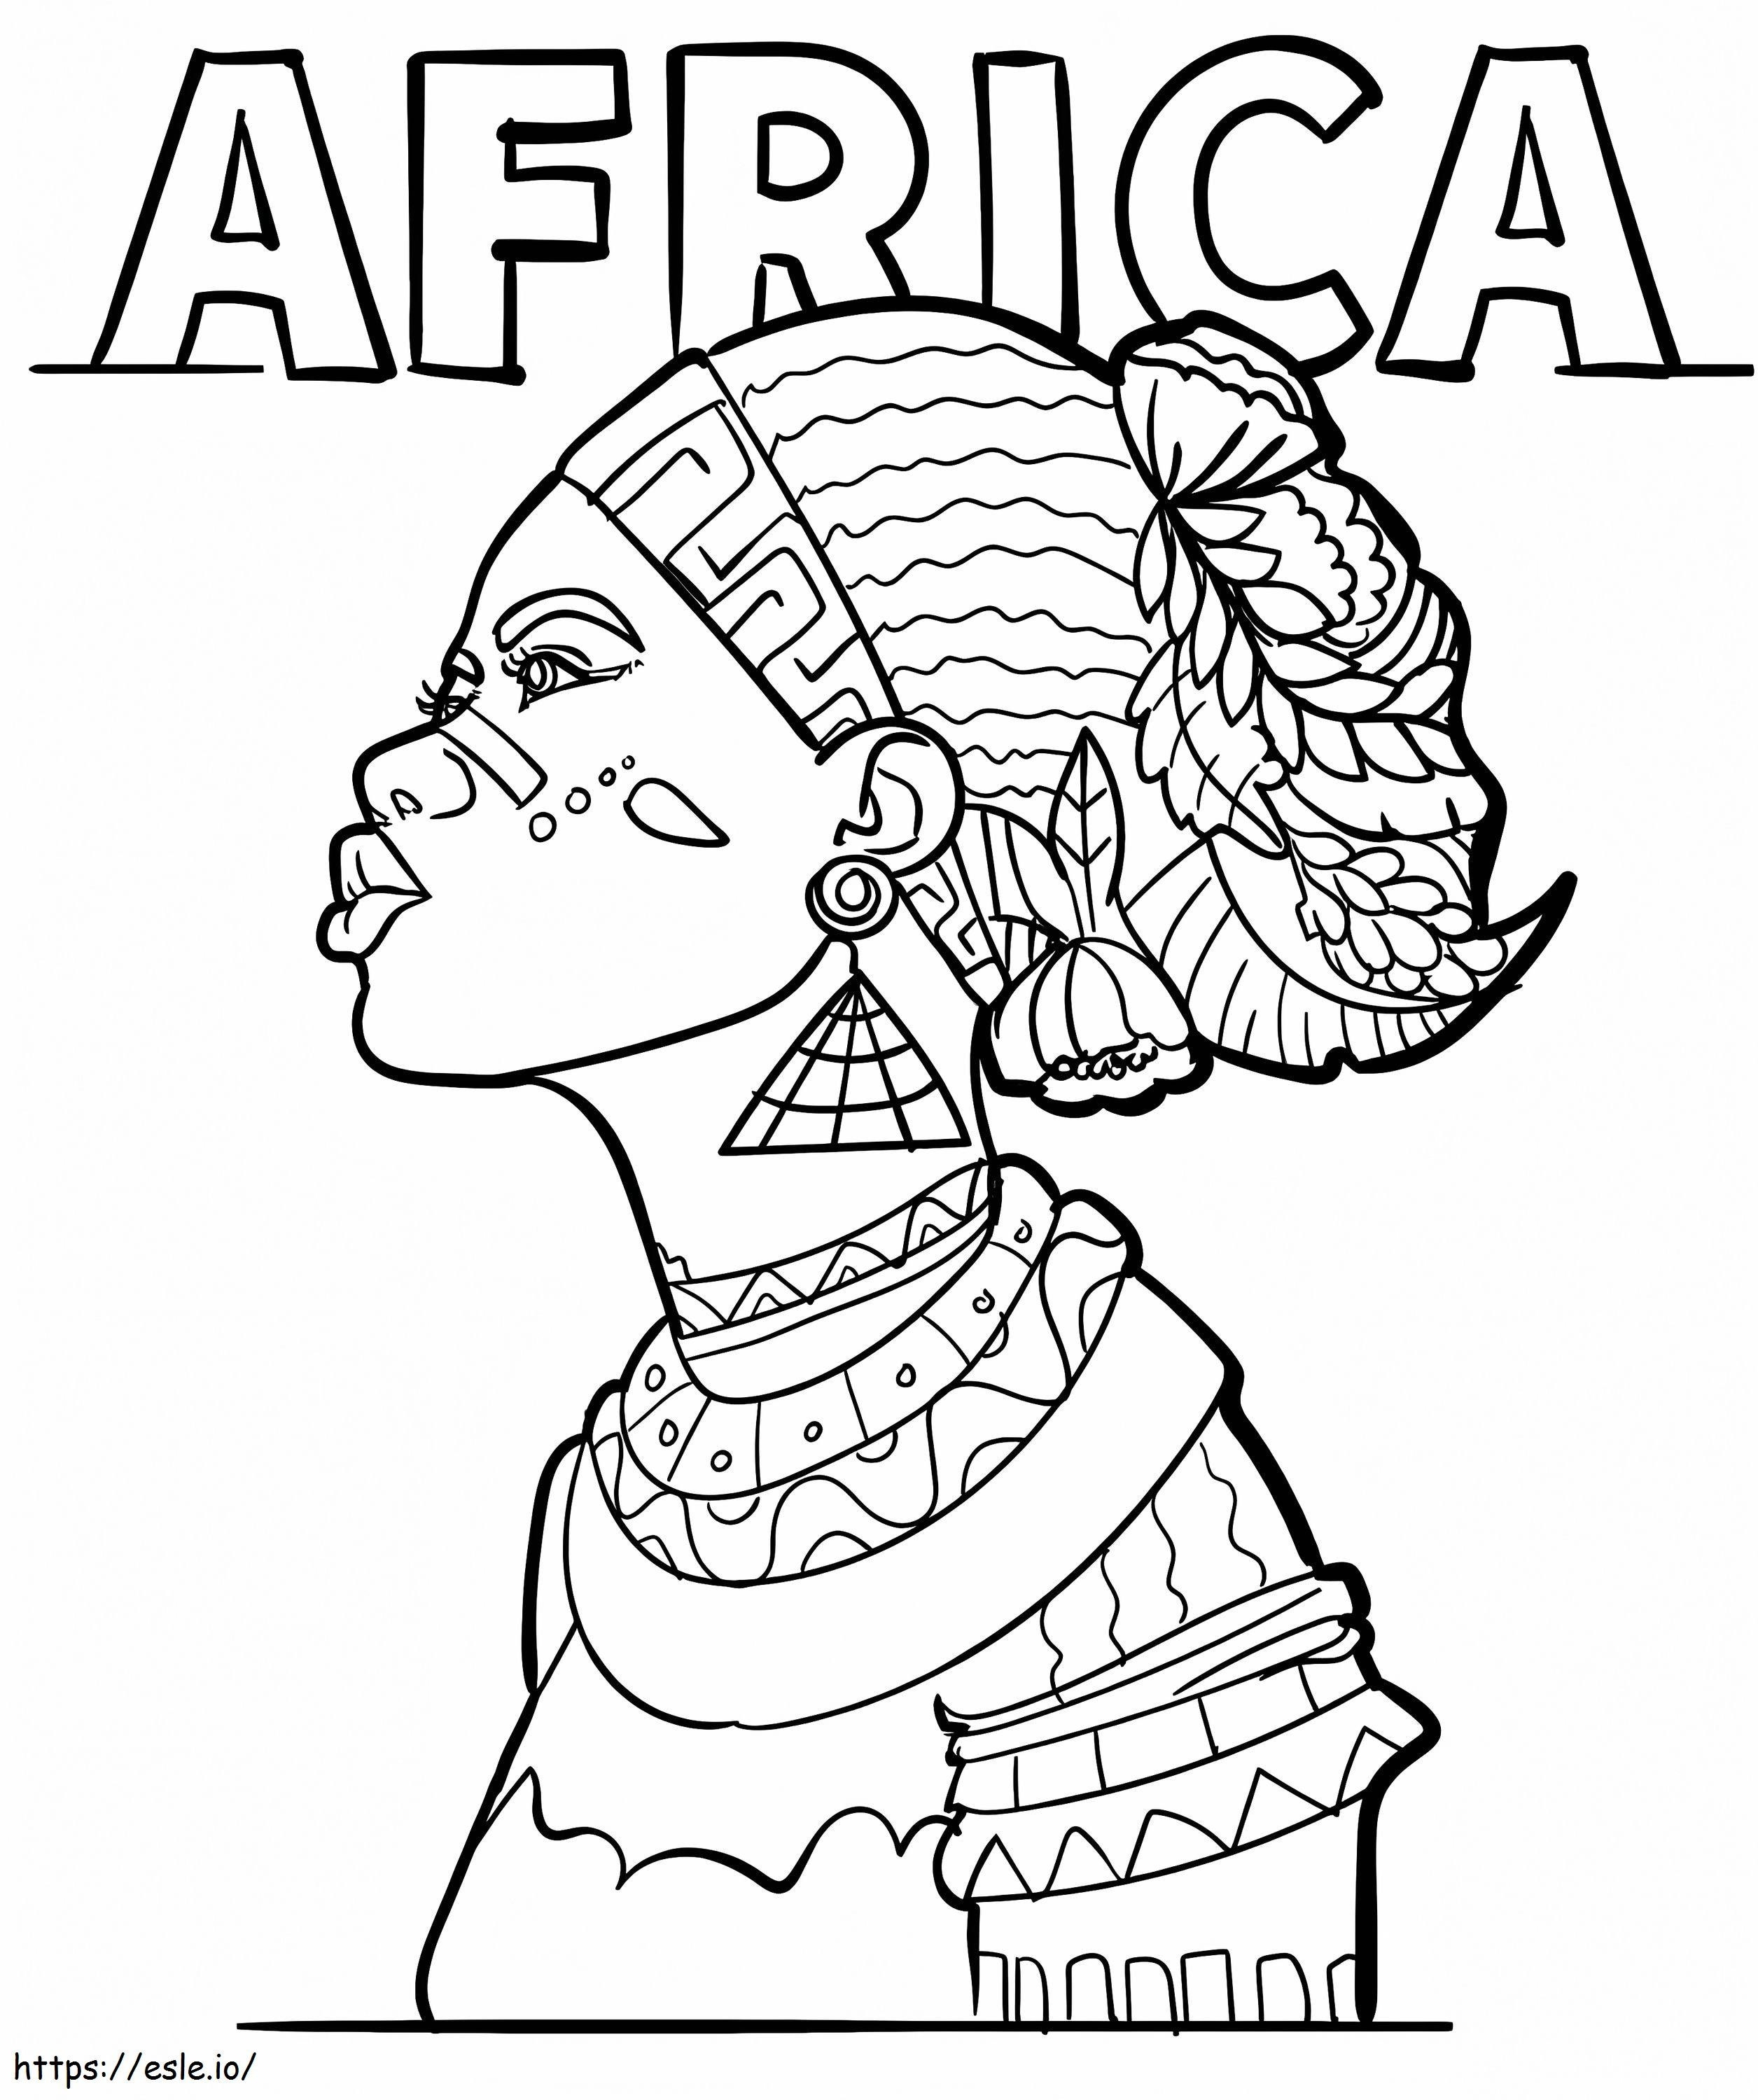 Mujer africana imprimible para colorear